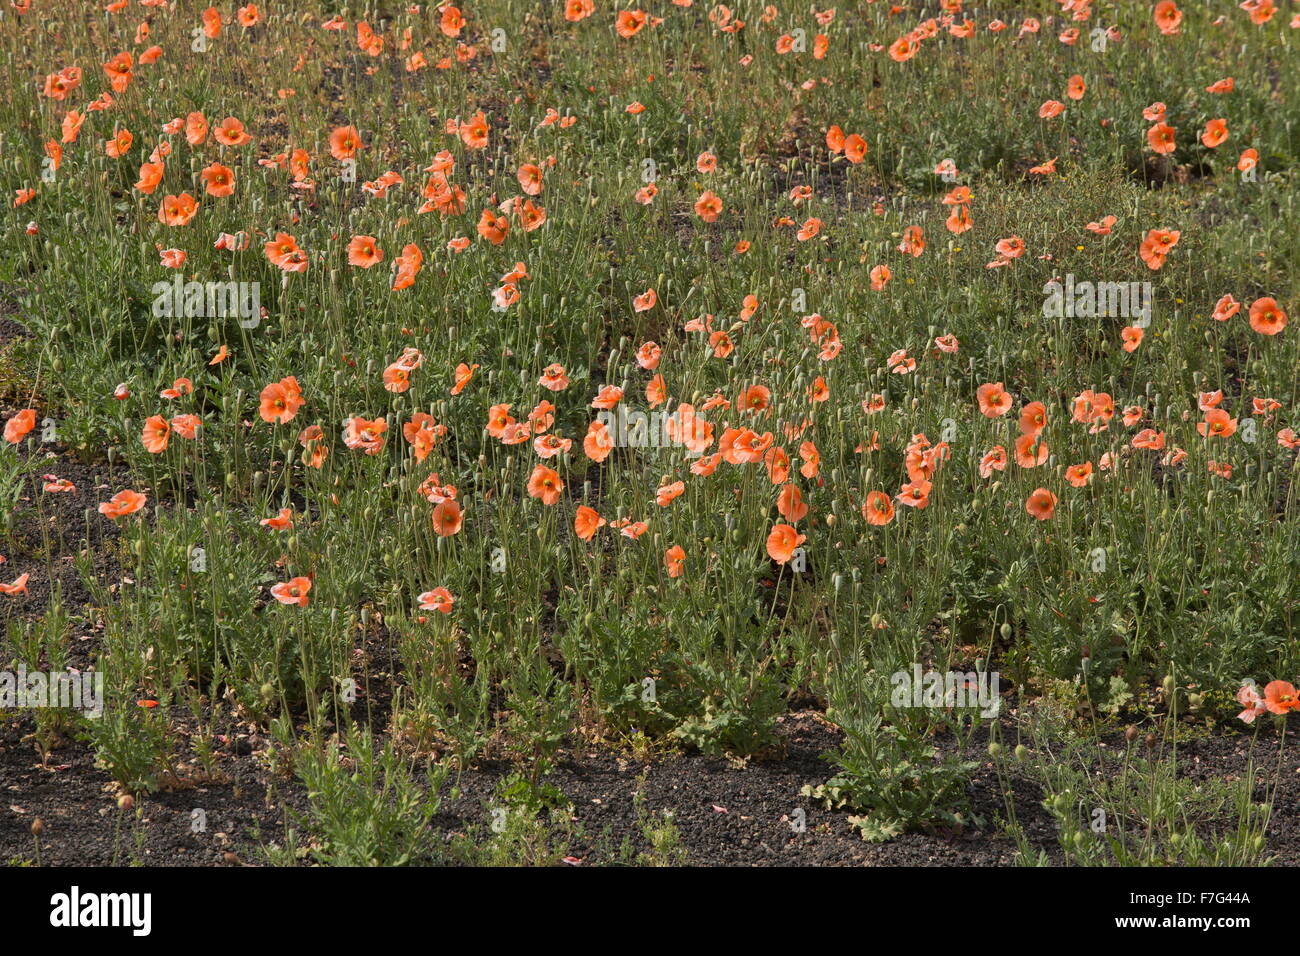 Long-headed poppy, Papaver dubium en masse, Lanzarote. Stock Photo